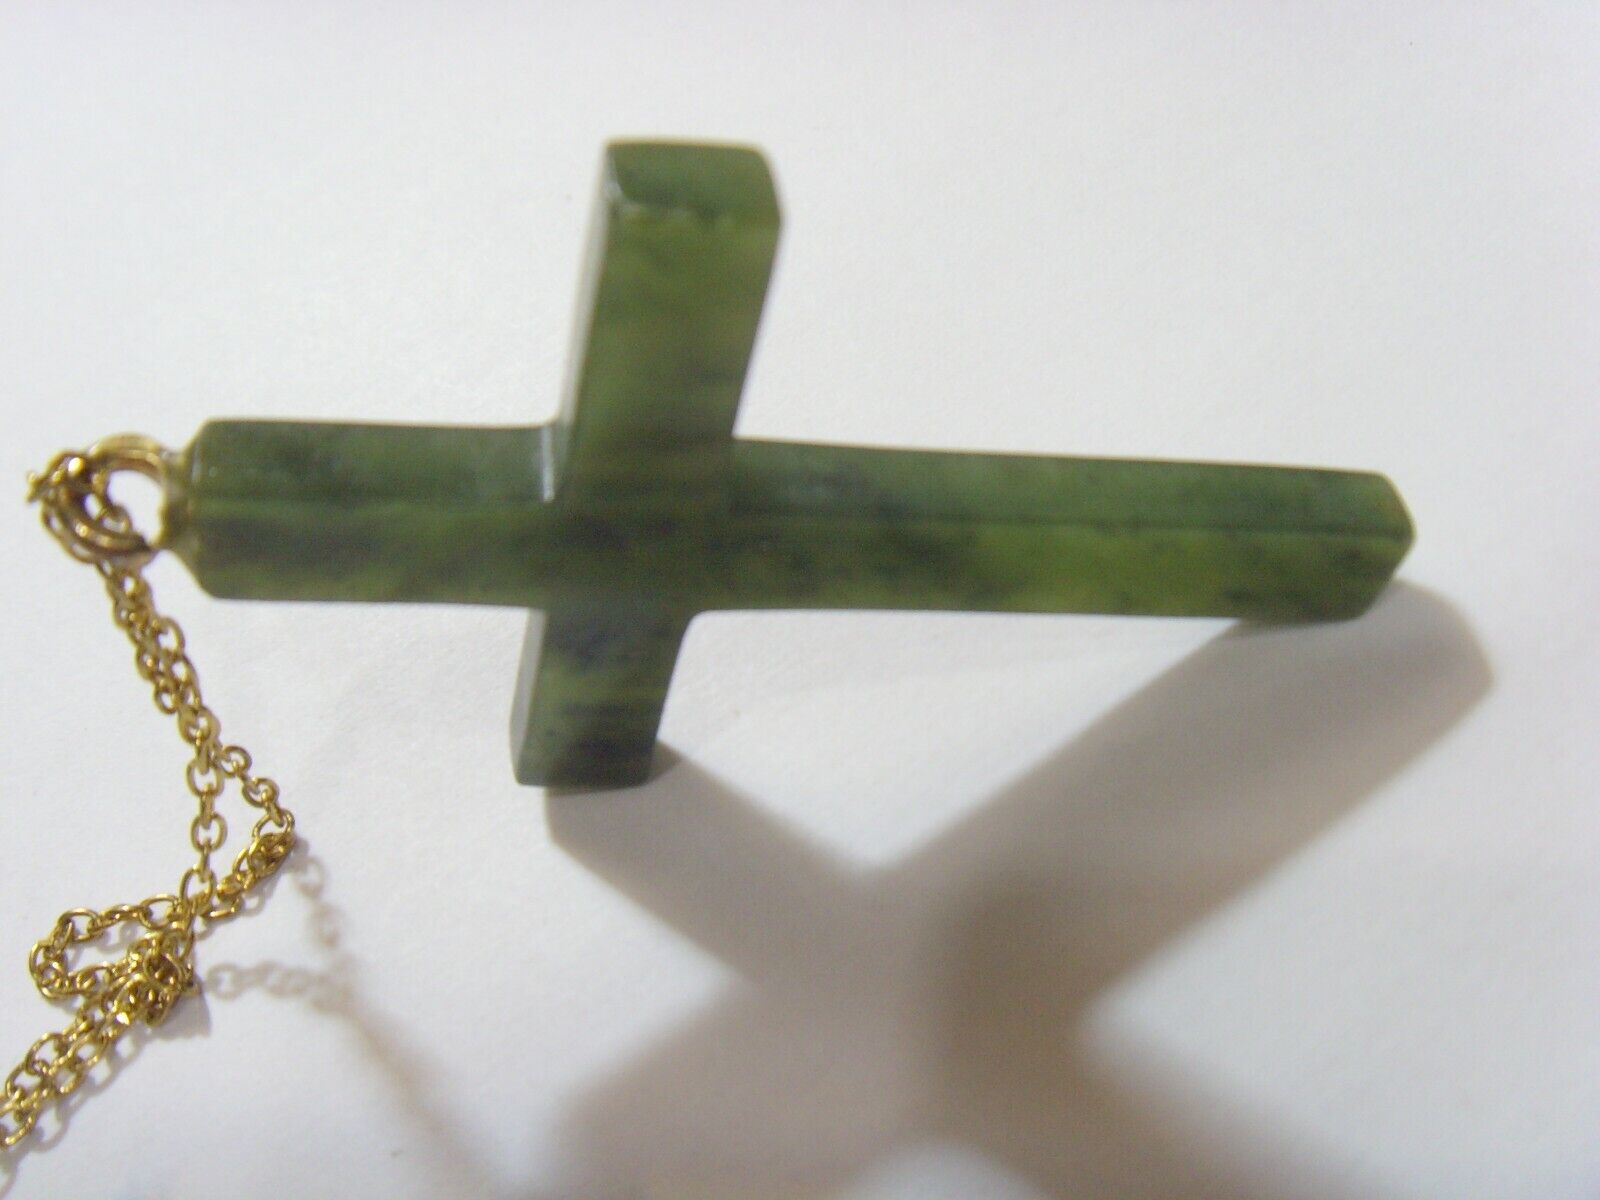 Antique green jade large cross pendant religious faith Christian necklace 51732